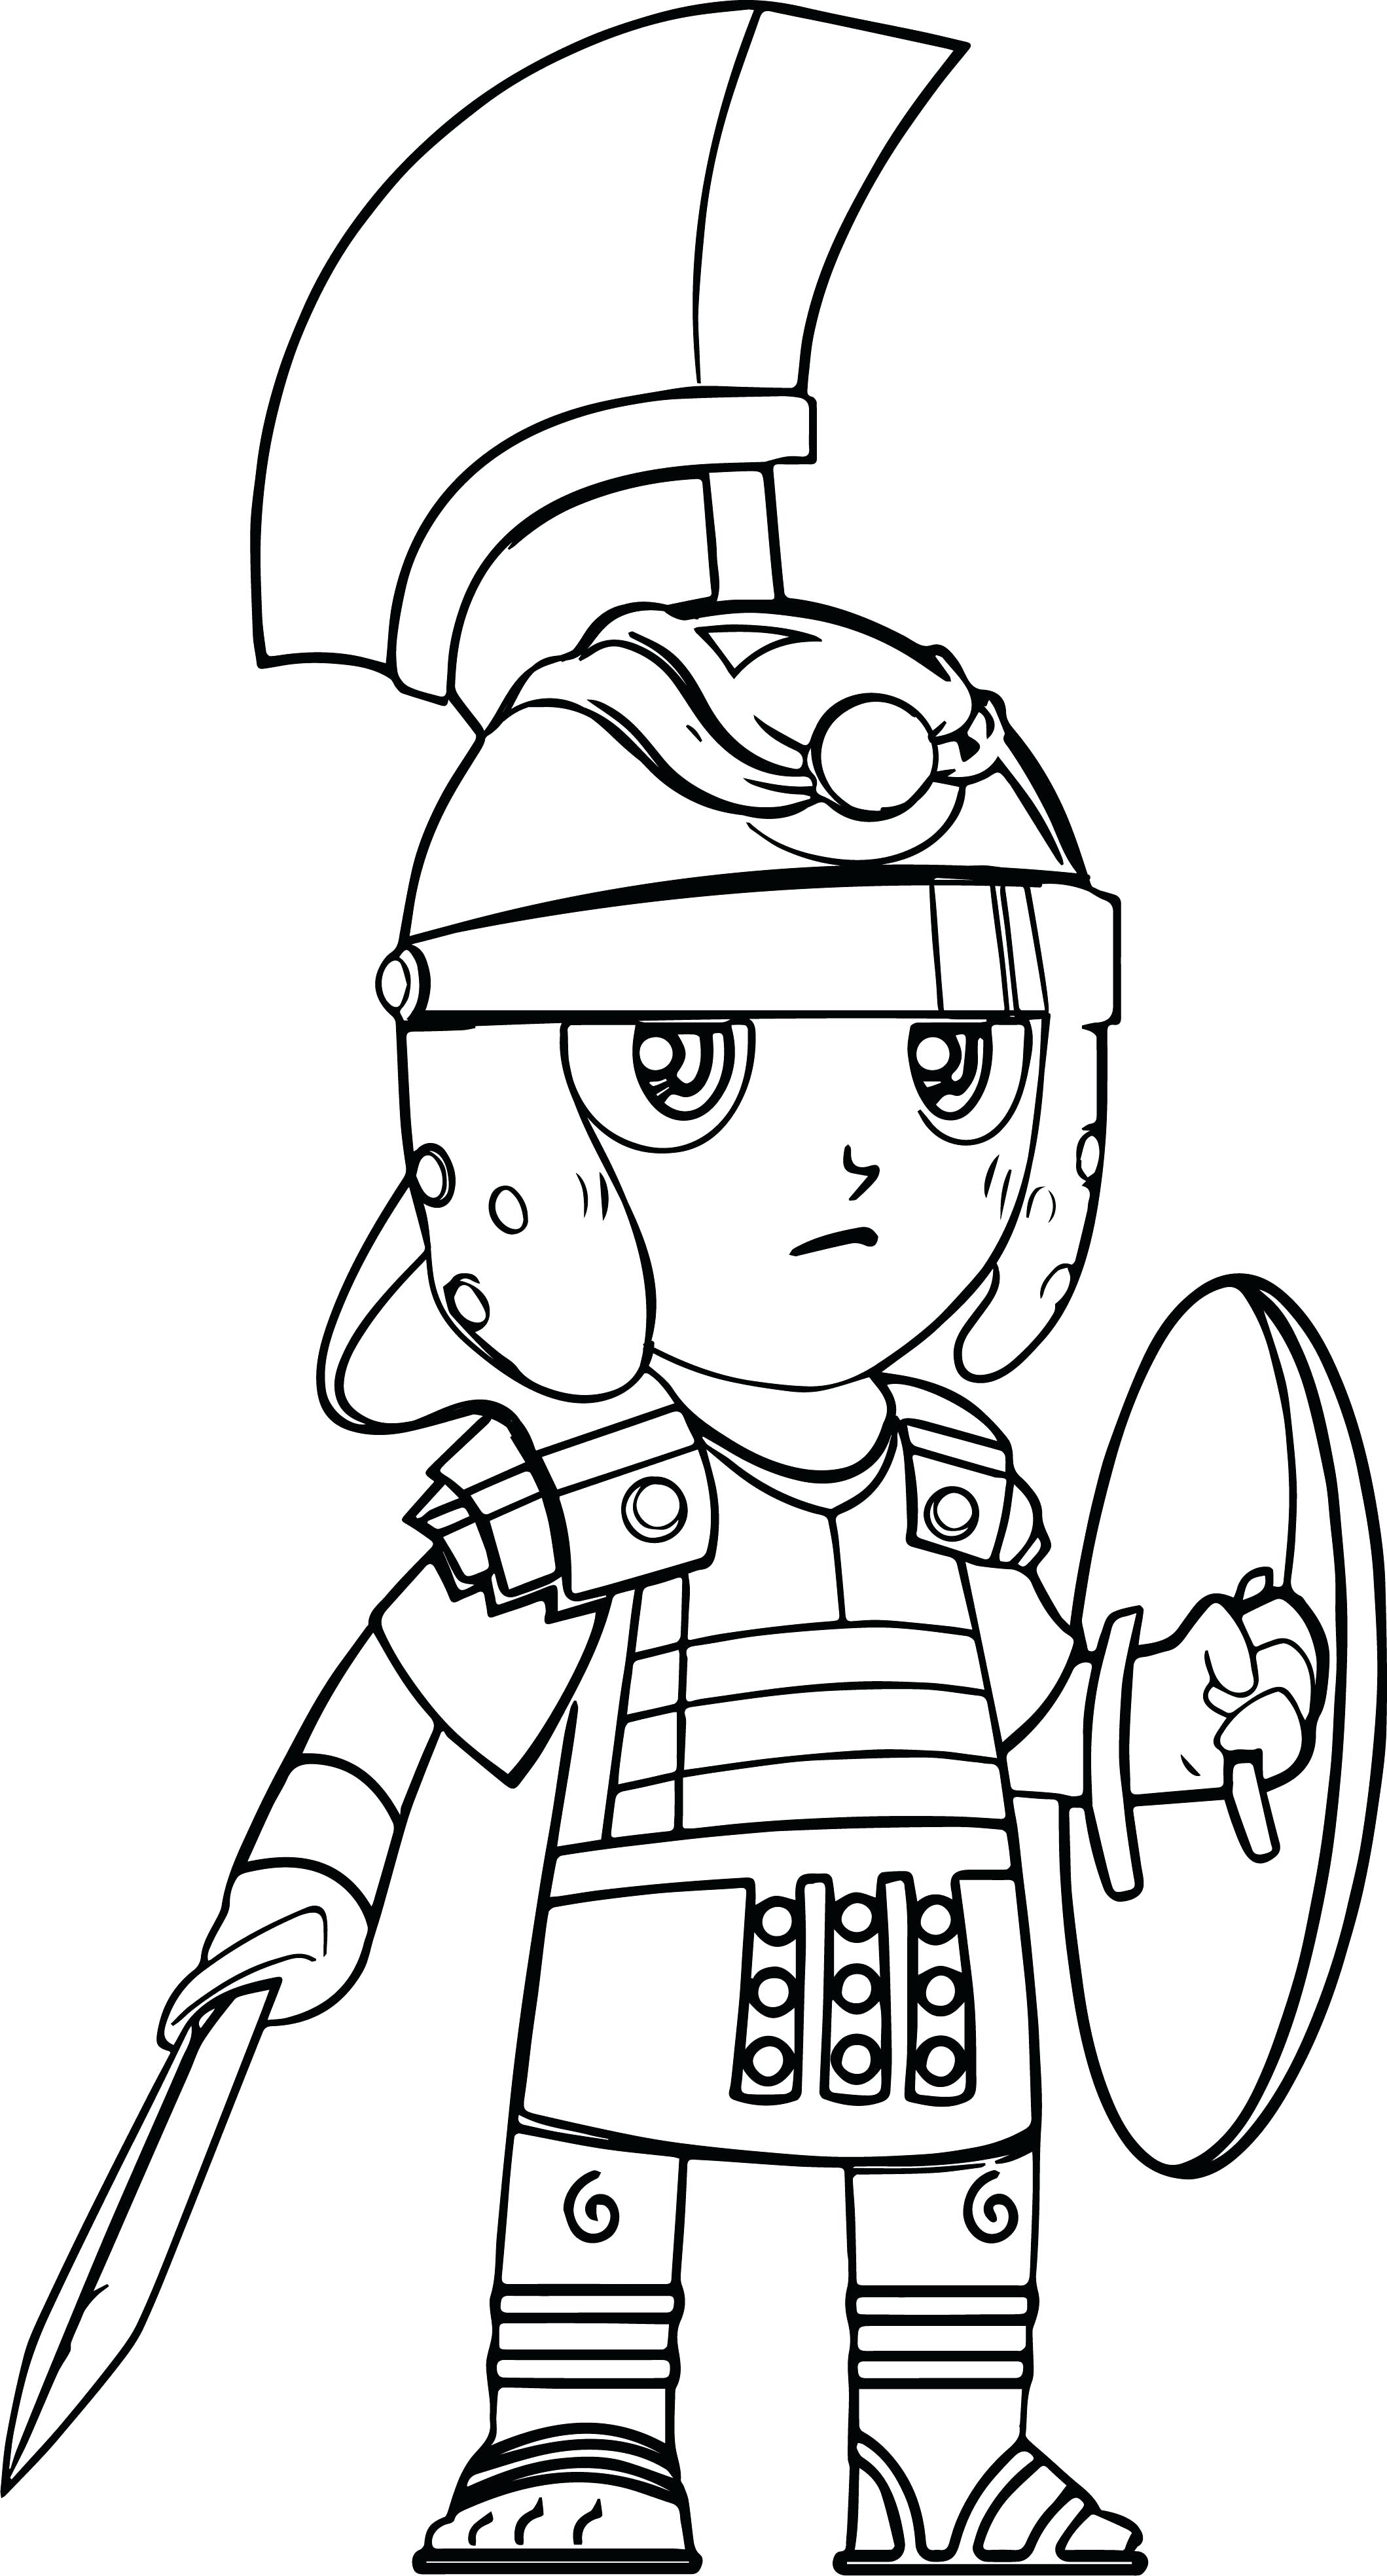 Roman Soldier Armor Coloring Page Sketch Coloring Page